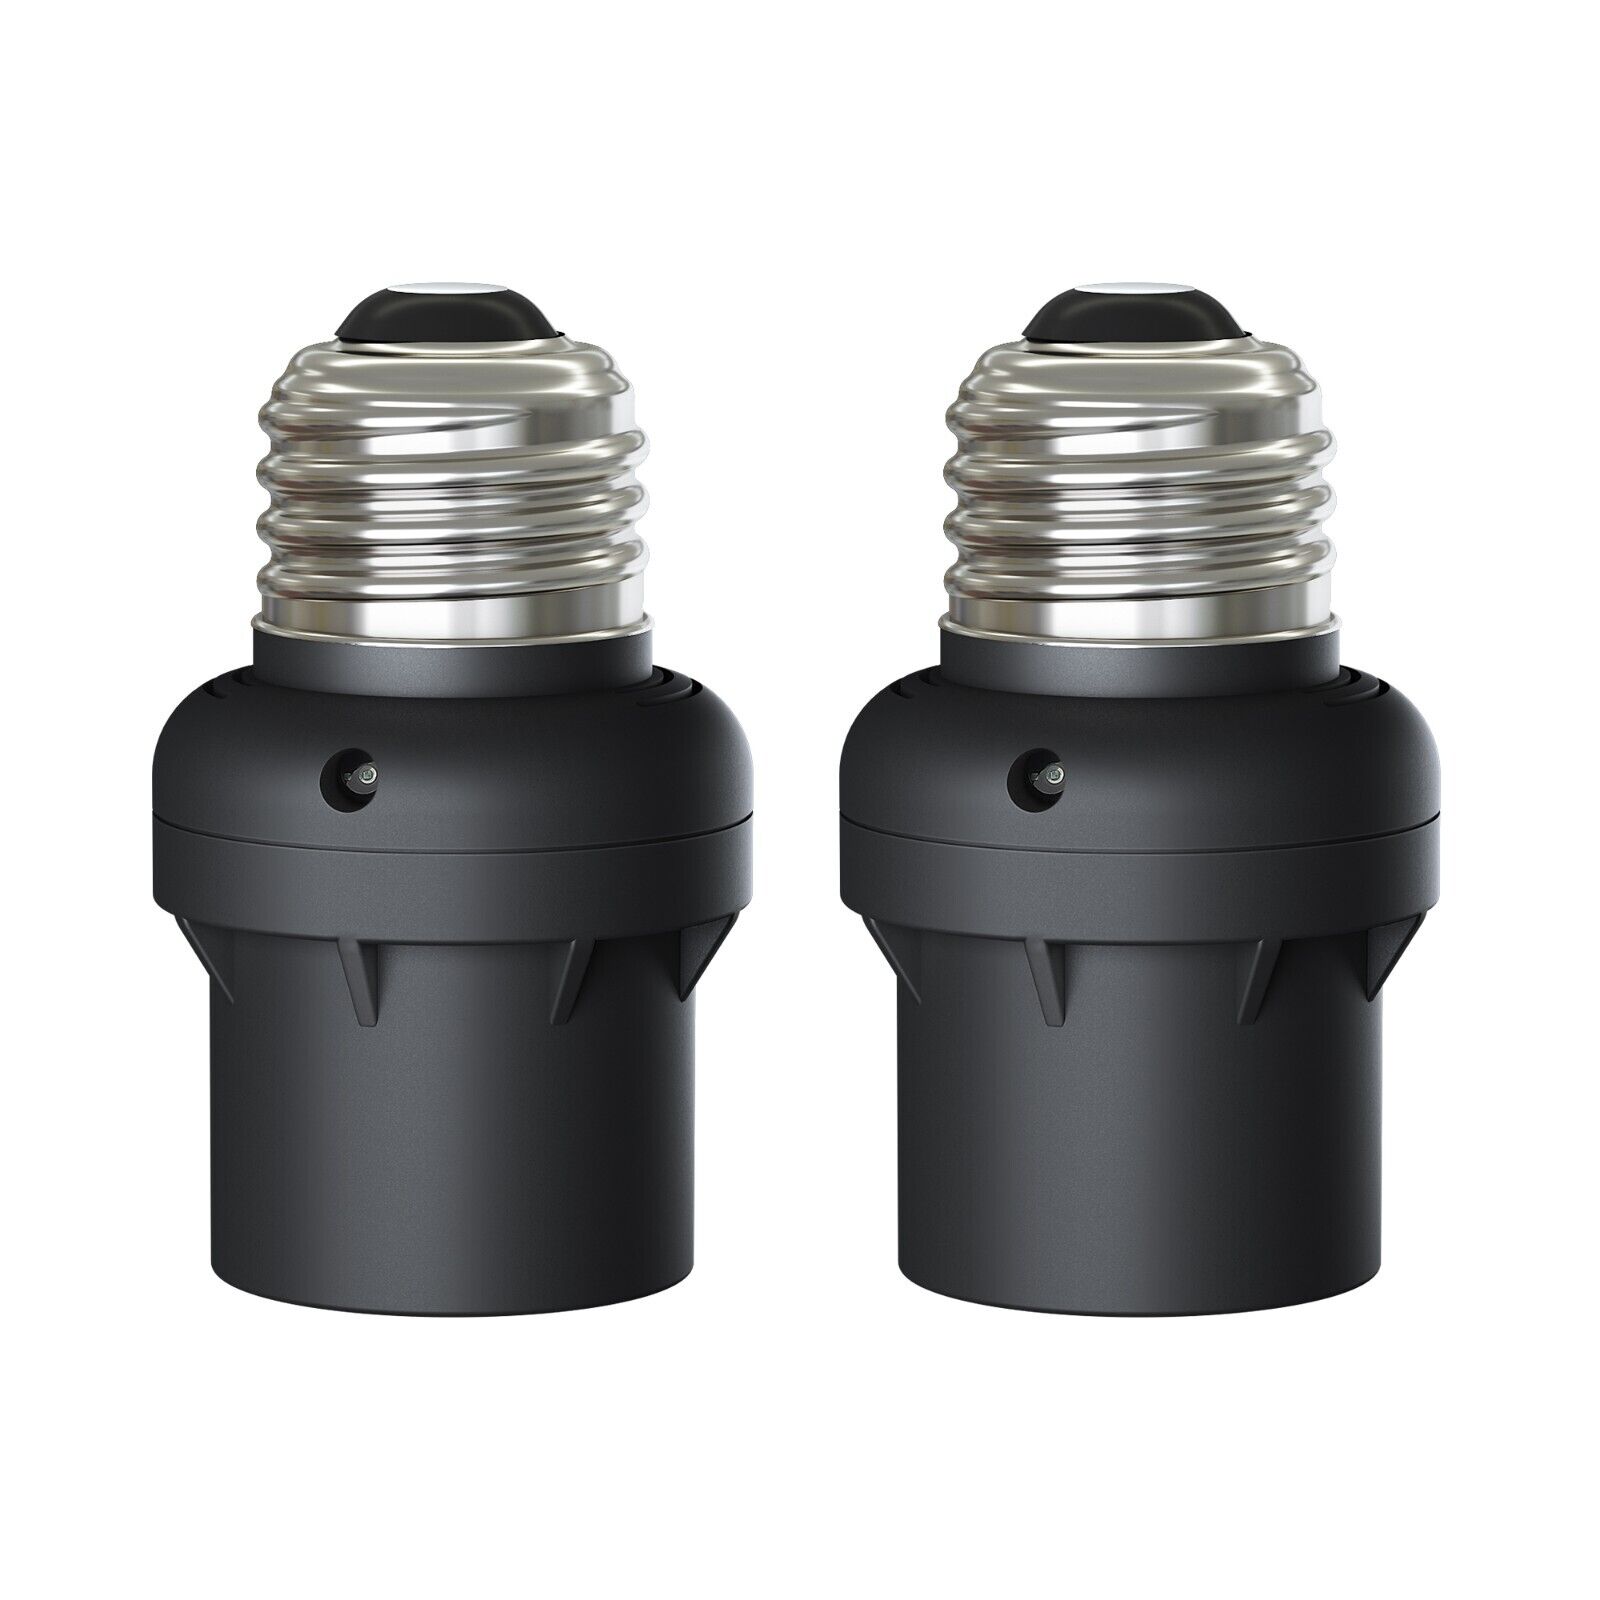 DEWENWILS 2 Pack Automatic Dusk to Dawn Light Bulb Sockets, Light Sensor Socket